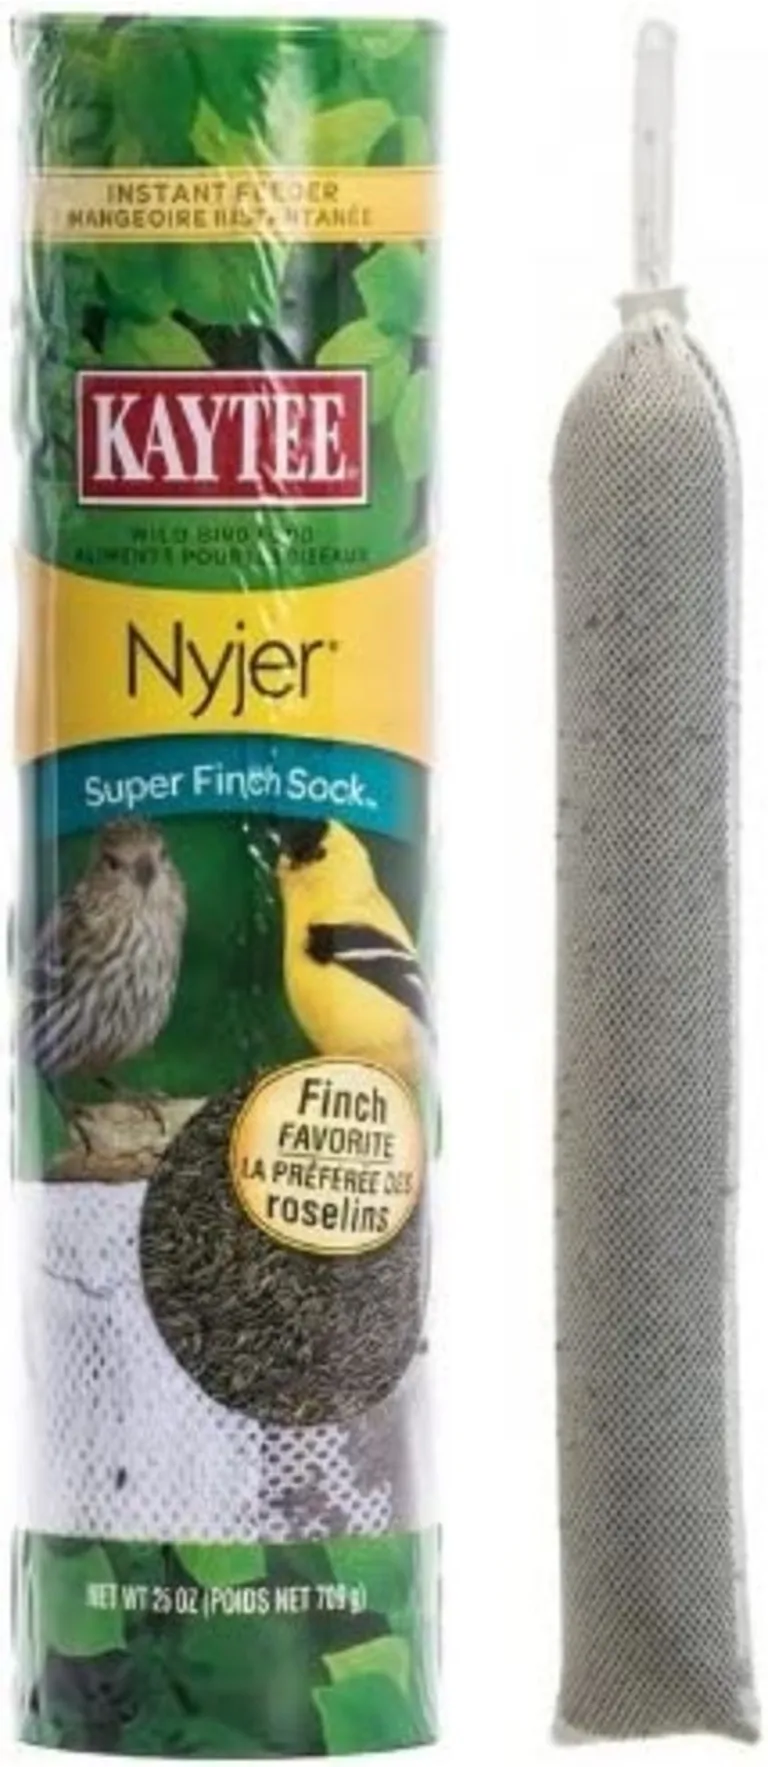 Kaytee Nyjer Super Finch Sock Instant Feeder with Wild Bird Food Photo 1